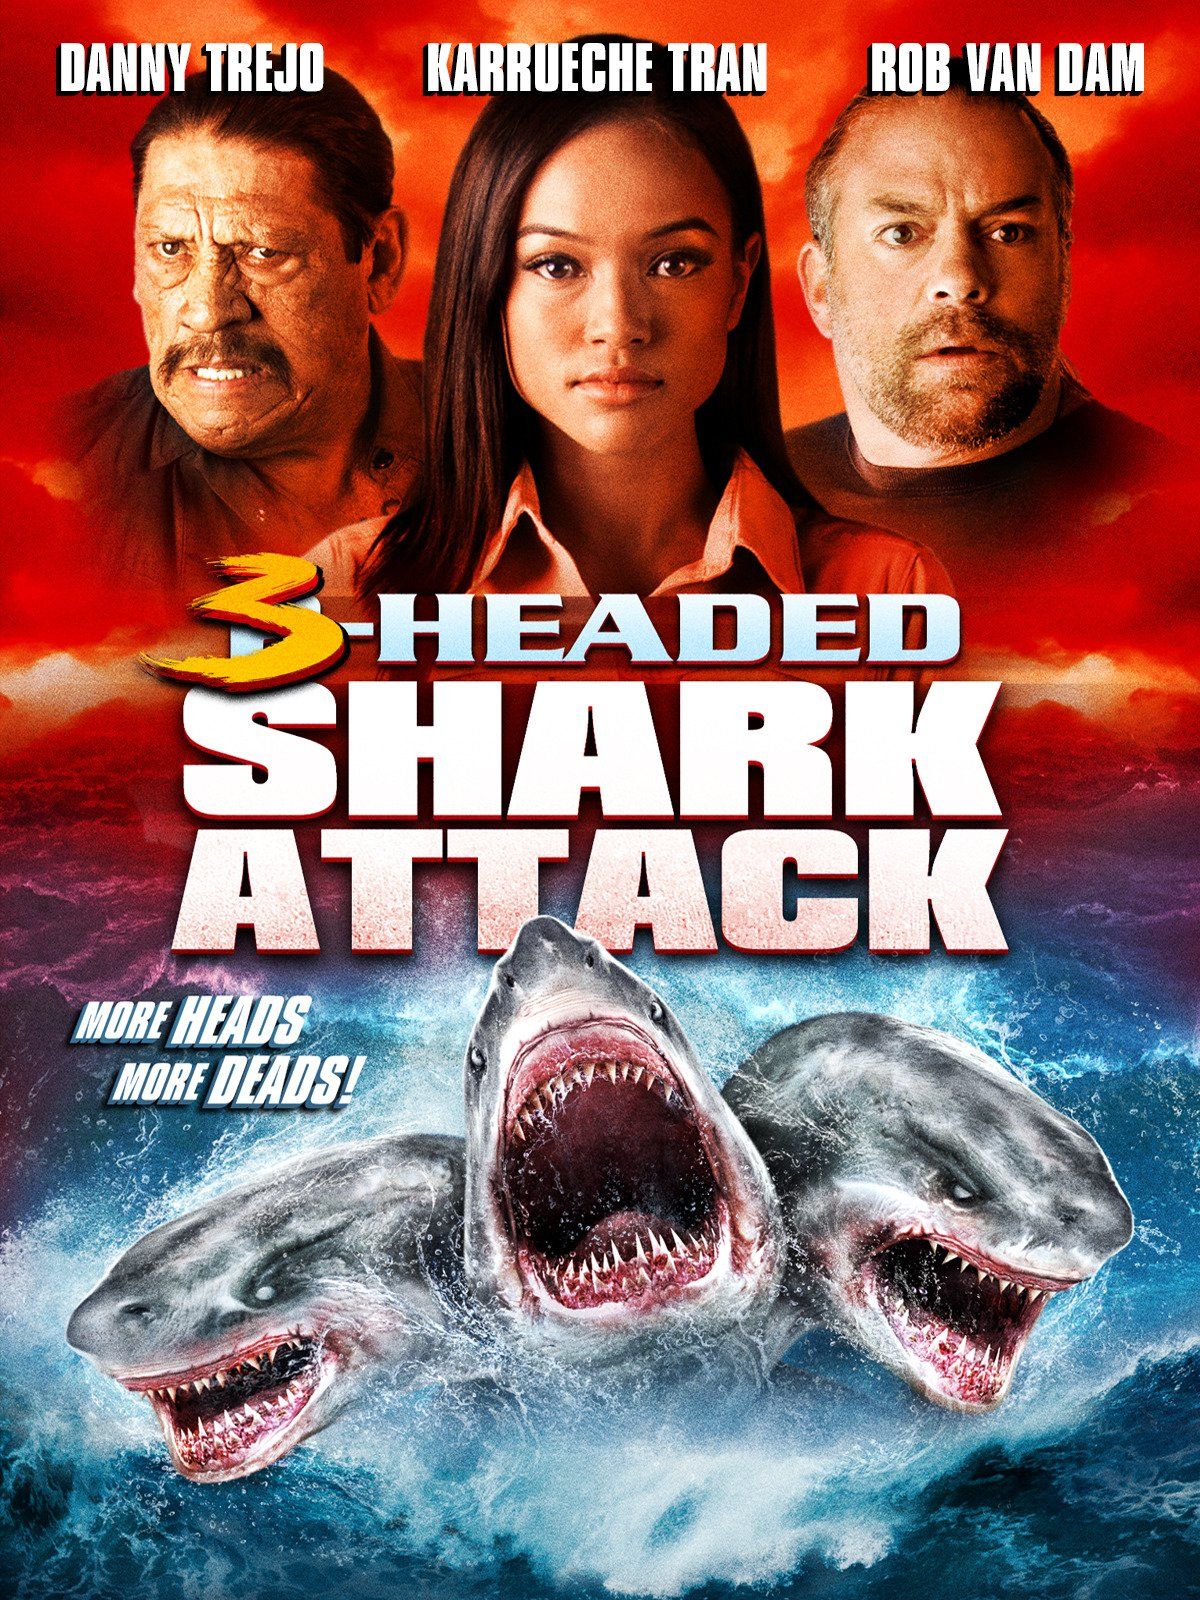 Watch 3 Headed Shark Attackamazon.com